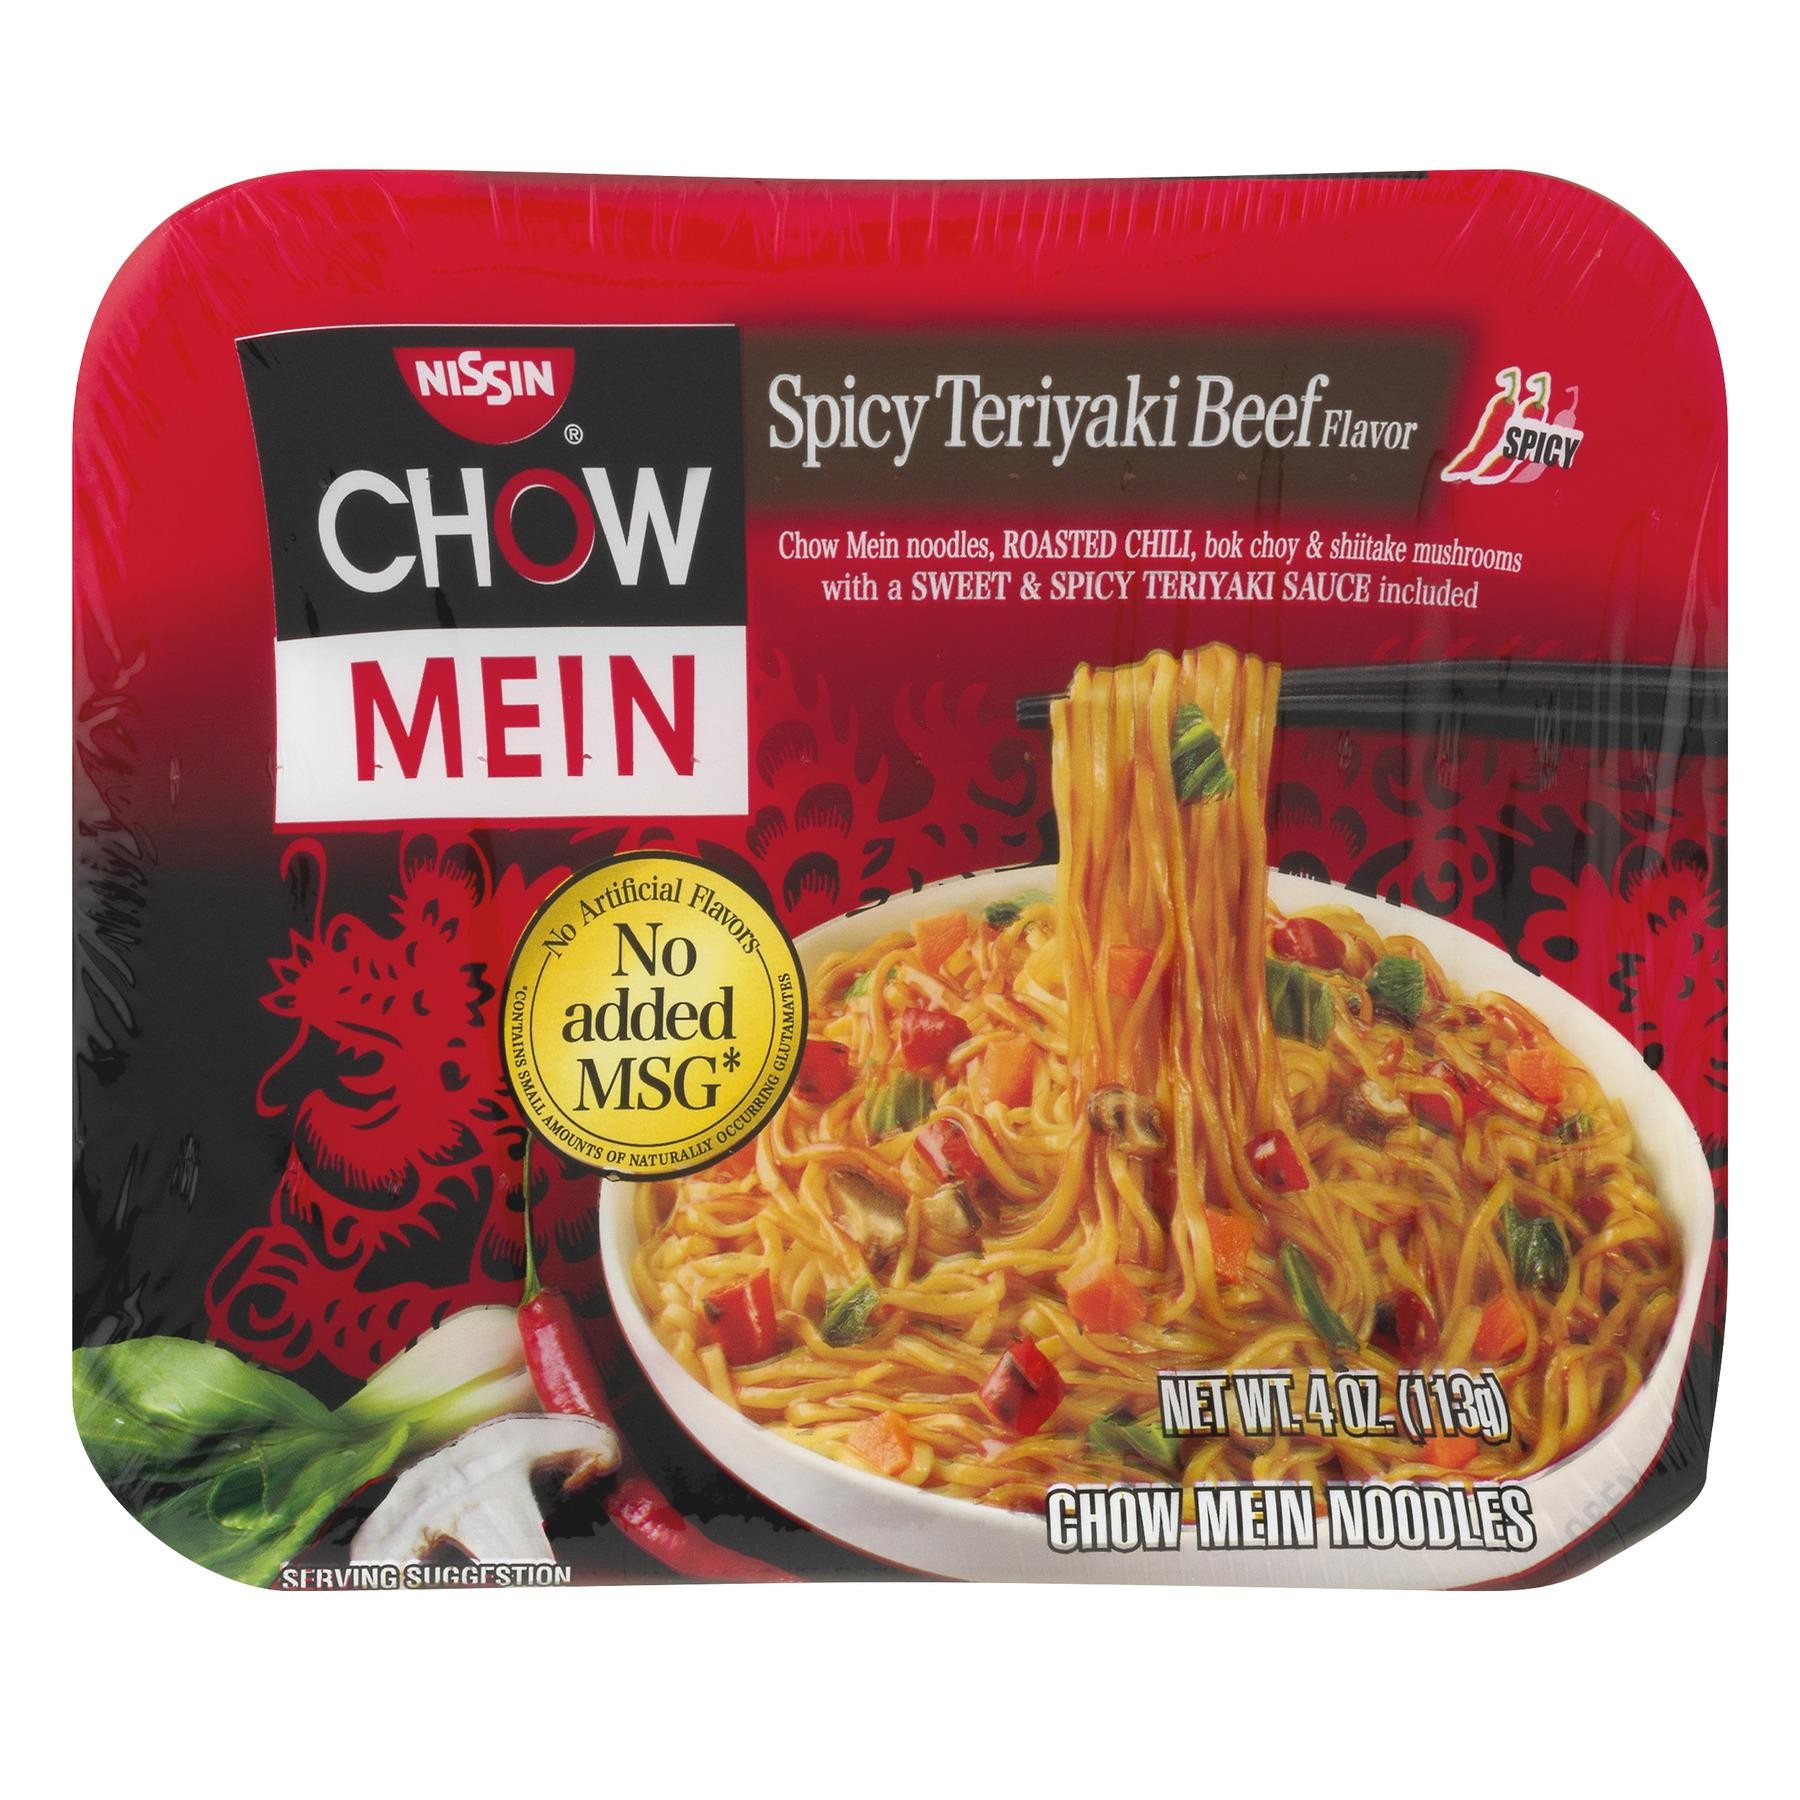 NissinÂ® Premium Spicy Teriyaki Beef Flavor Chow Mein Noodles 4 Oz. Tray